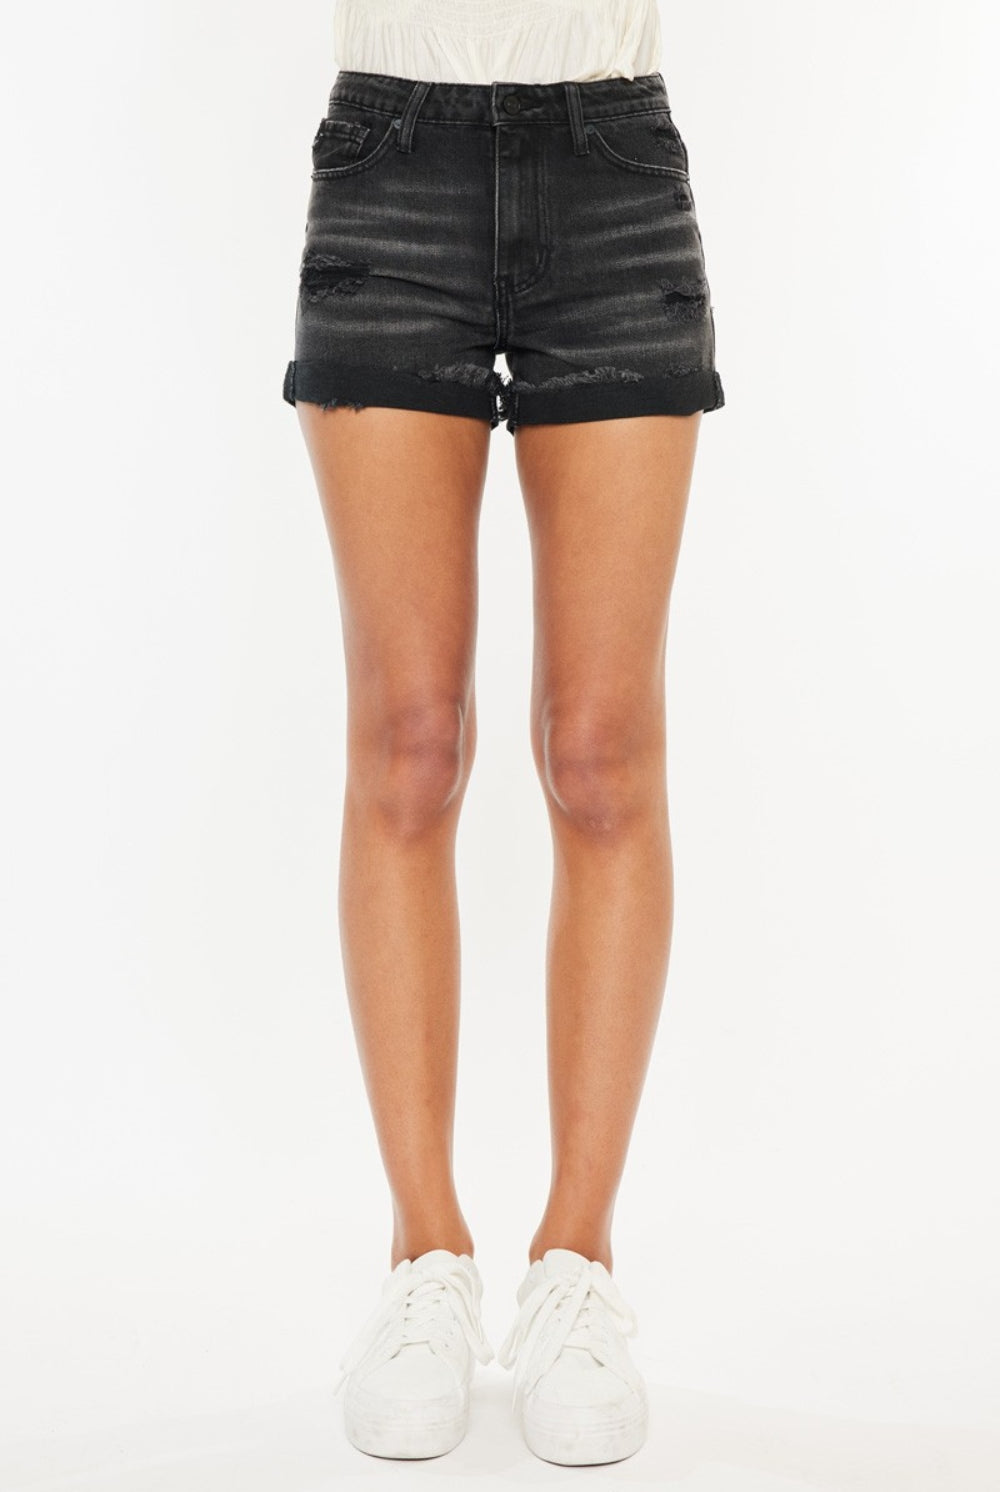 Kancan High Waist Distressed Denim Shorts-Krush Kandy, Women's Online Fashion Boutique Located in Phoenix, Arizona (Scottsdale Area)